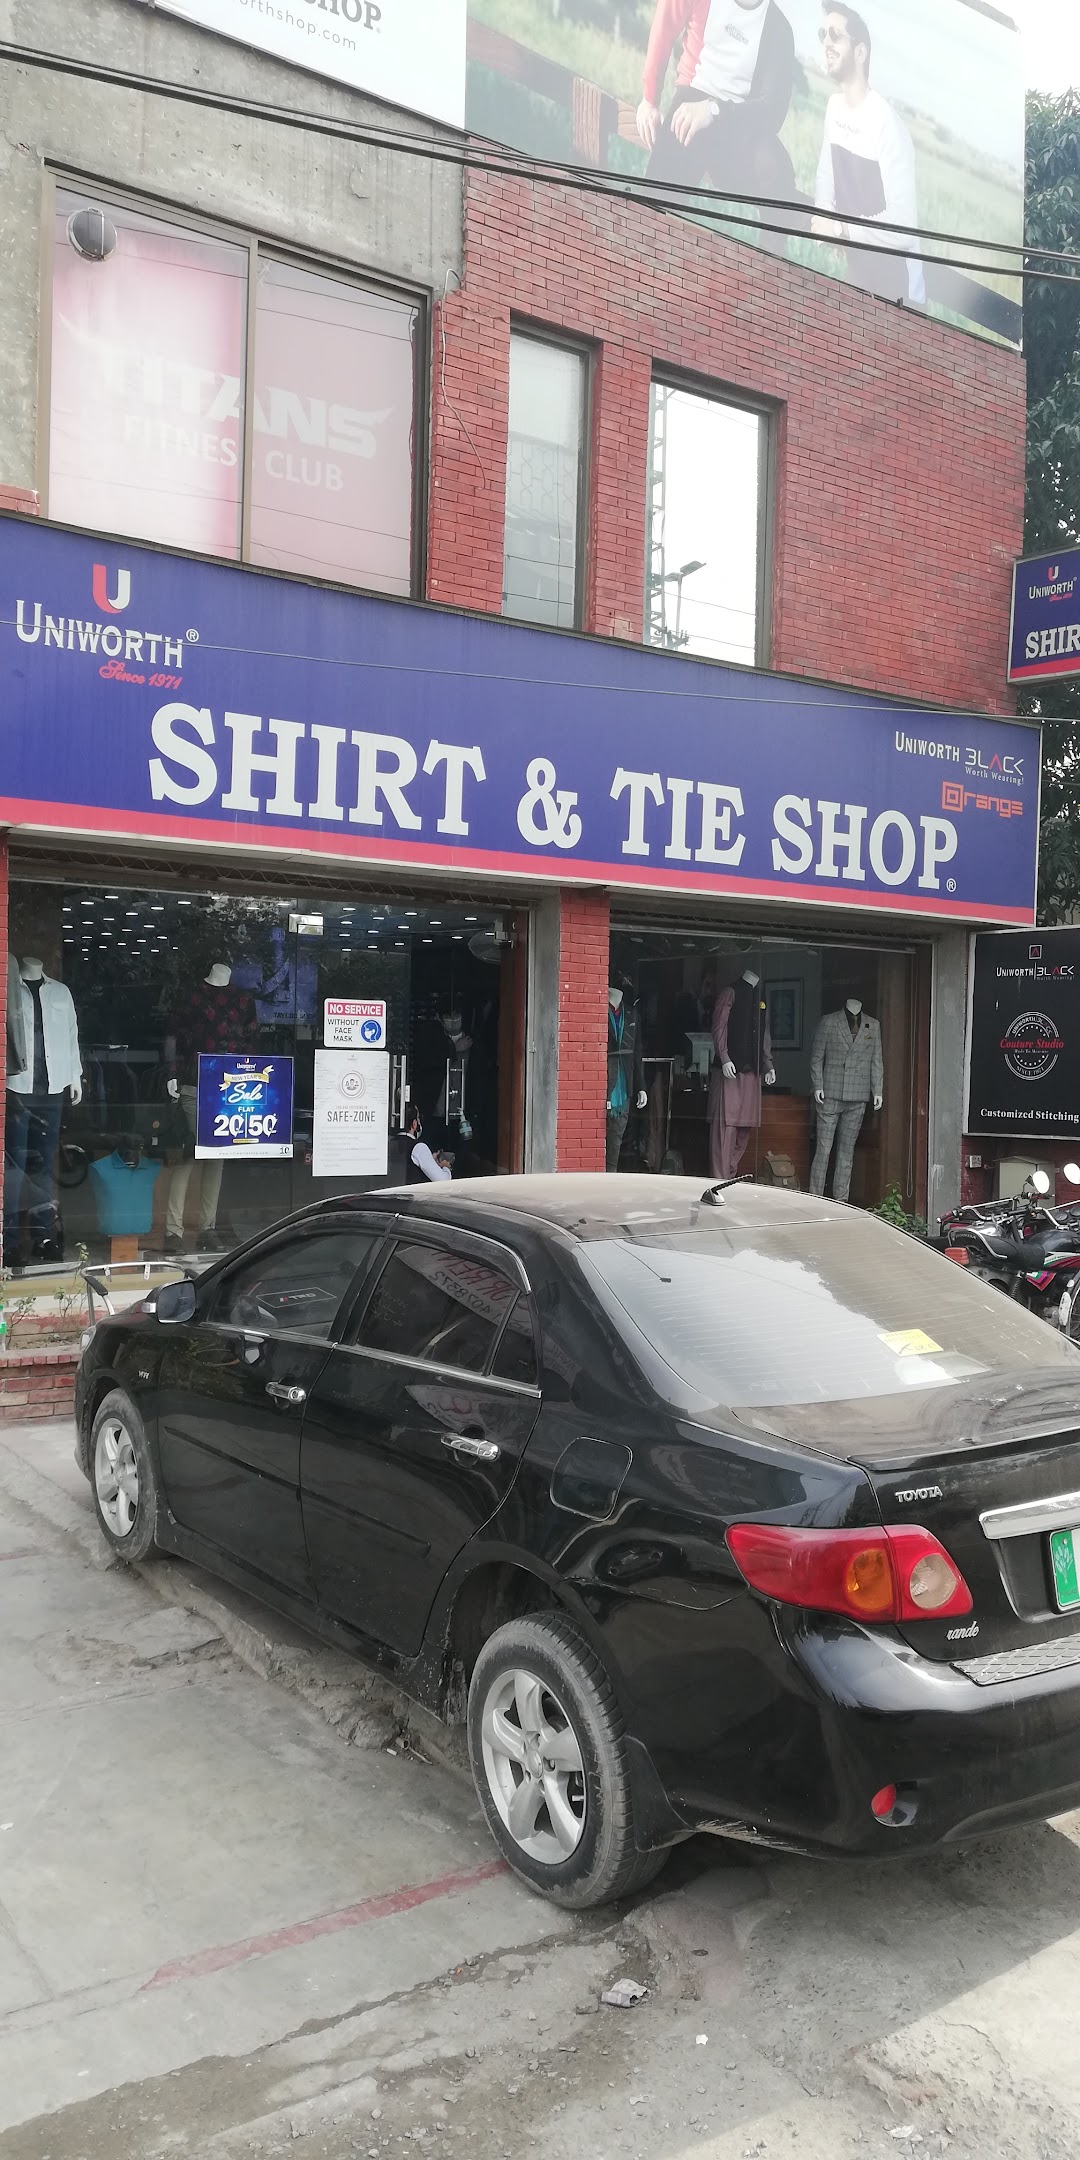 Uniworth Shirt & Tie Shop